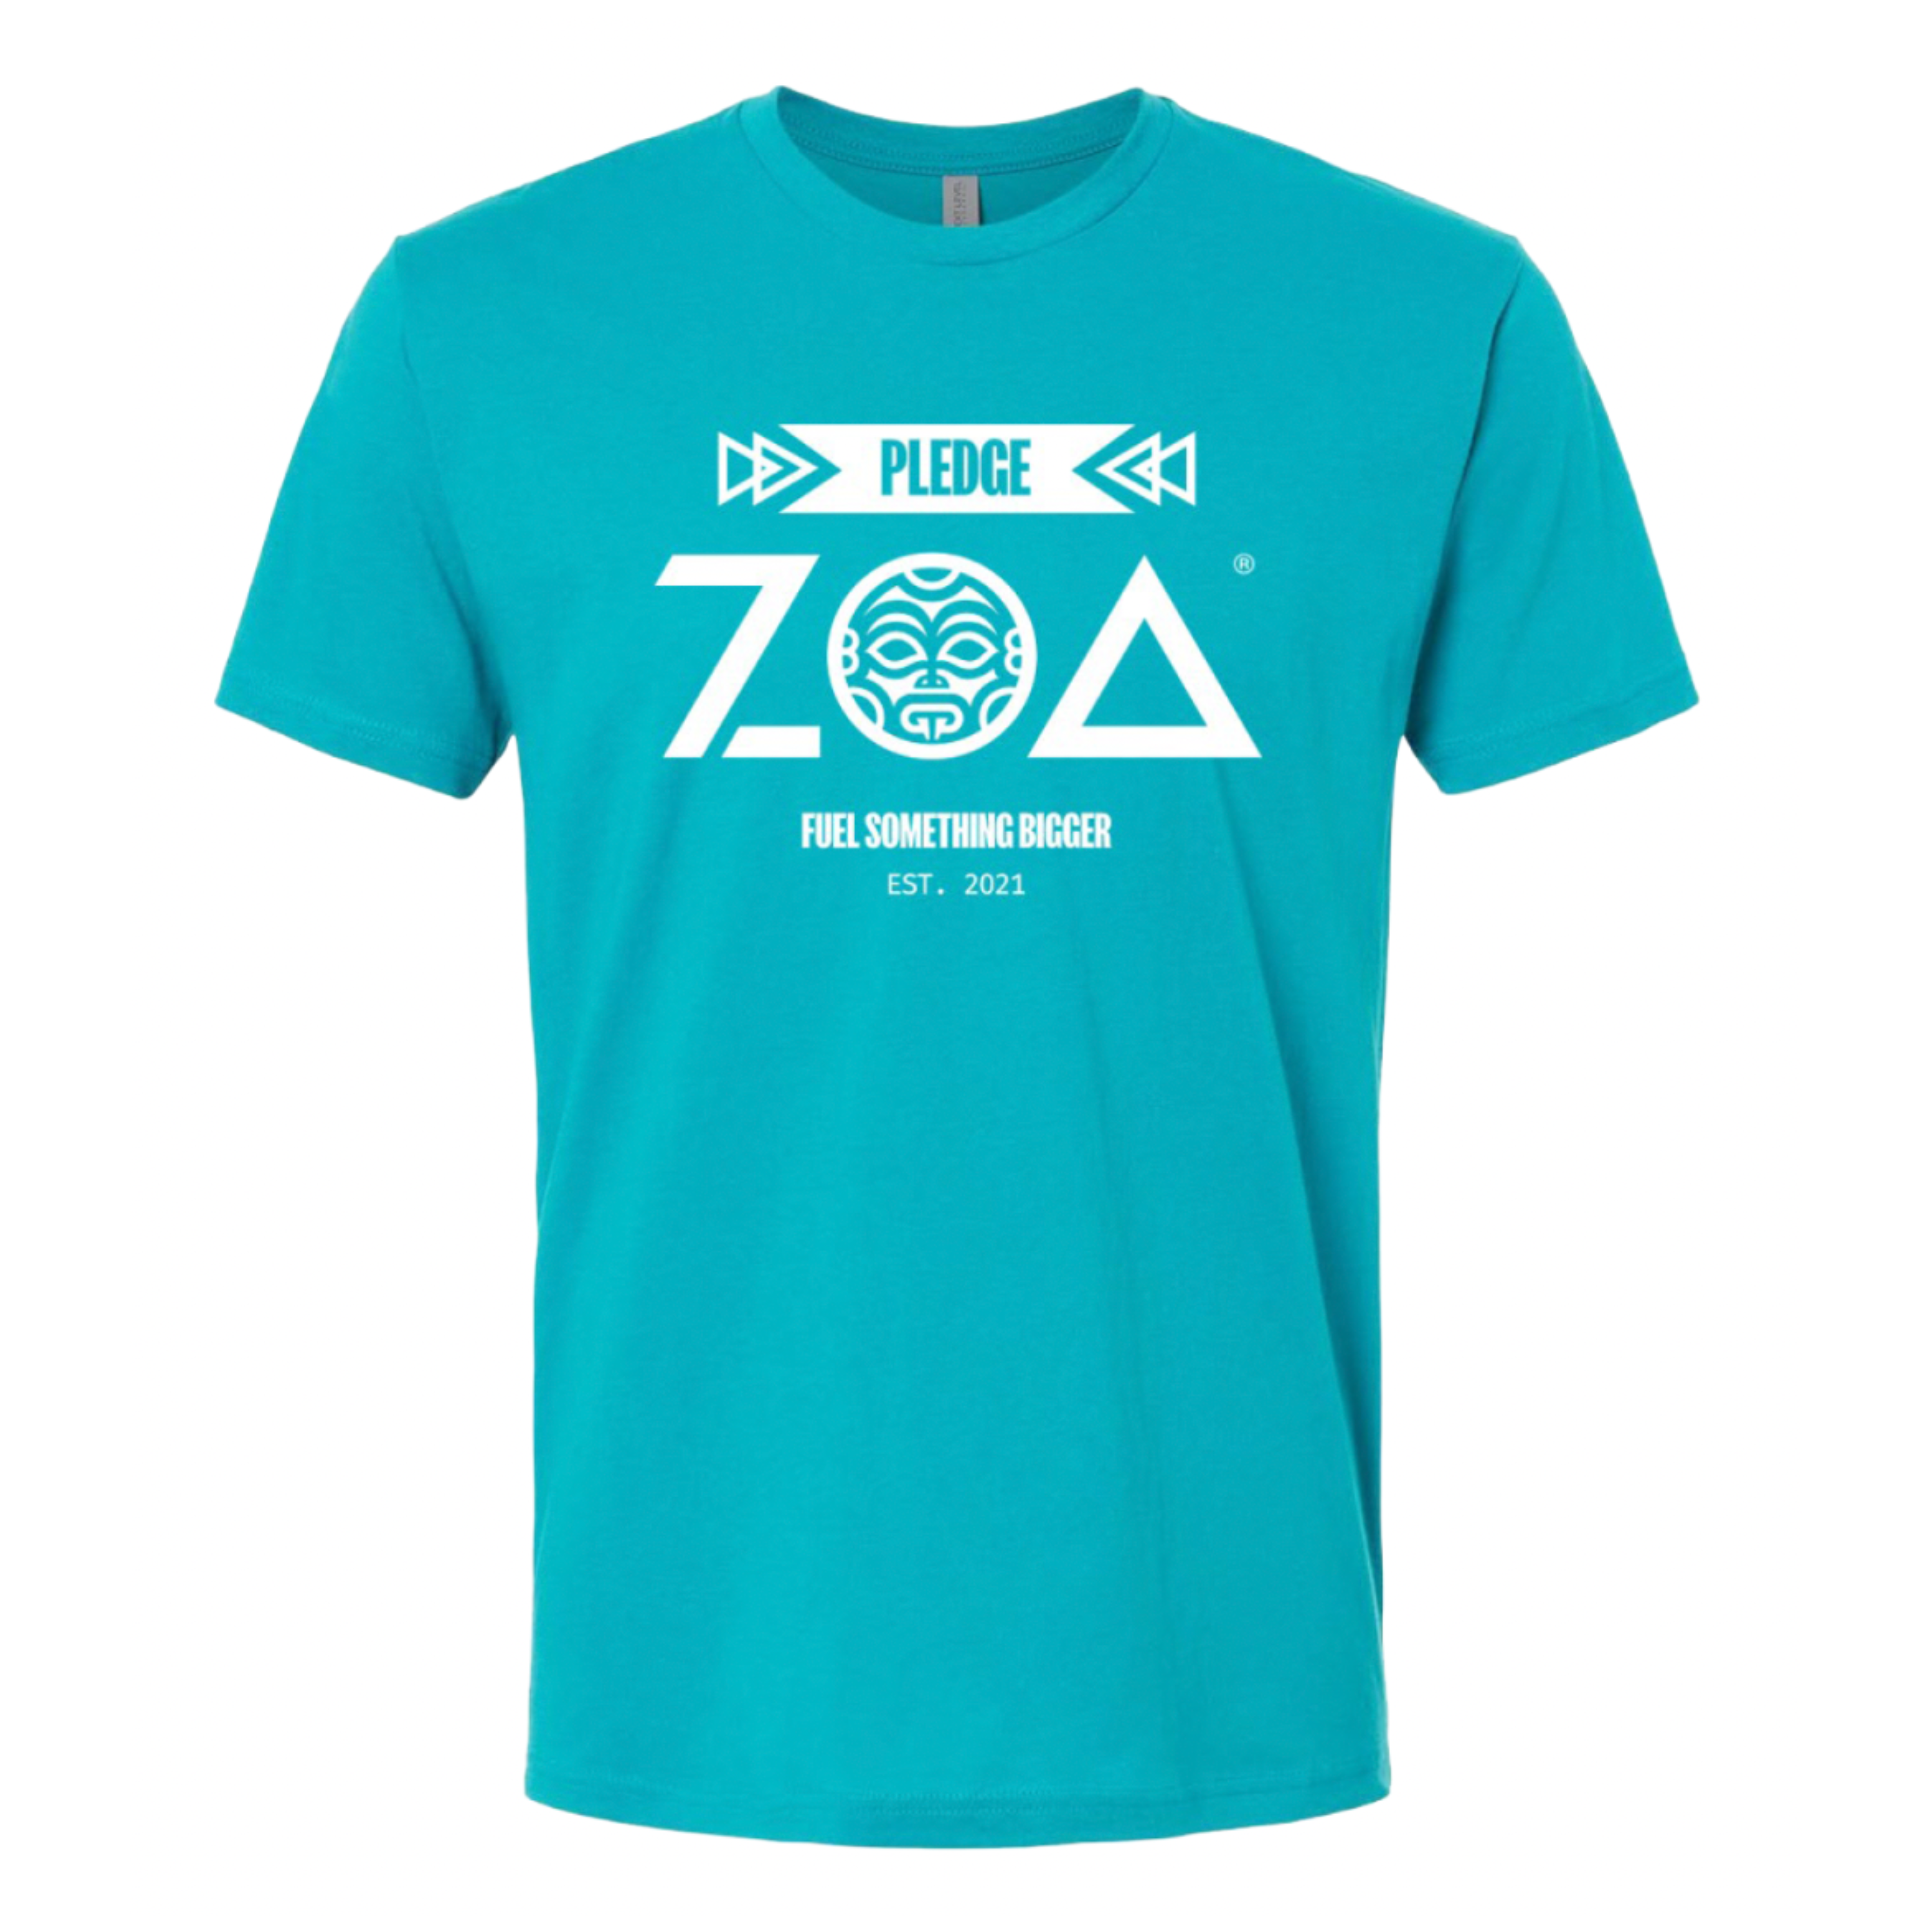 Pledge ZOA T-Shirt